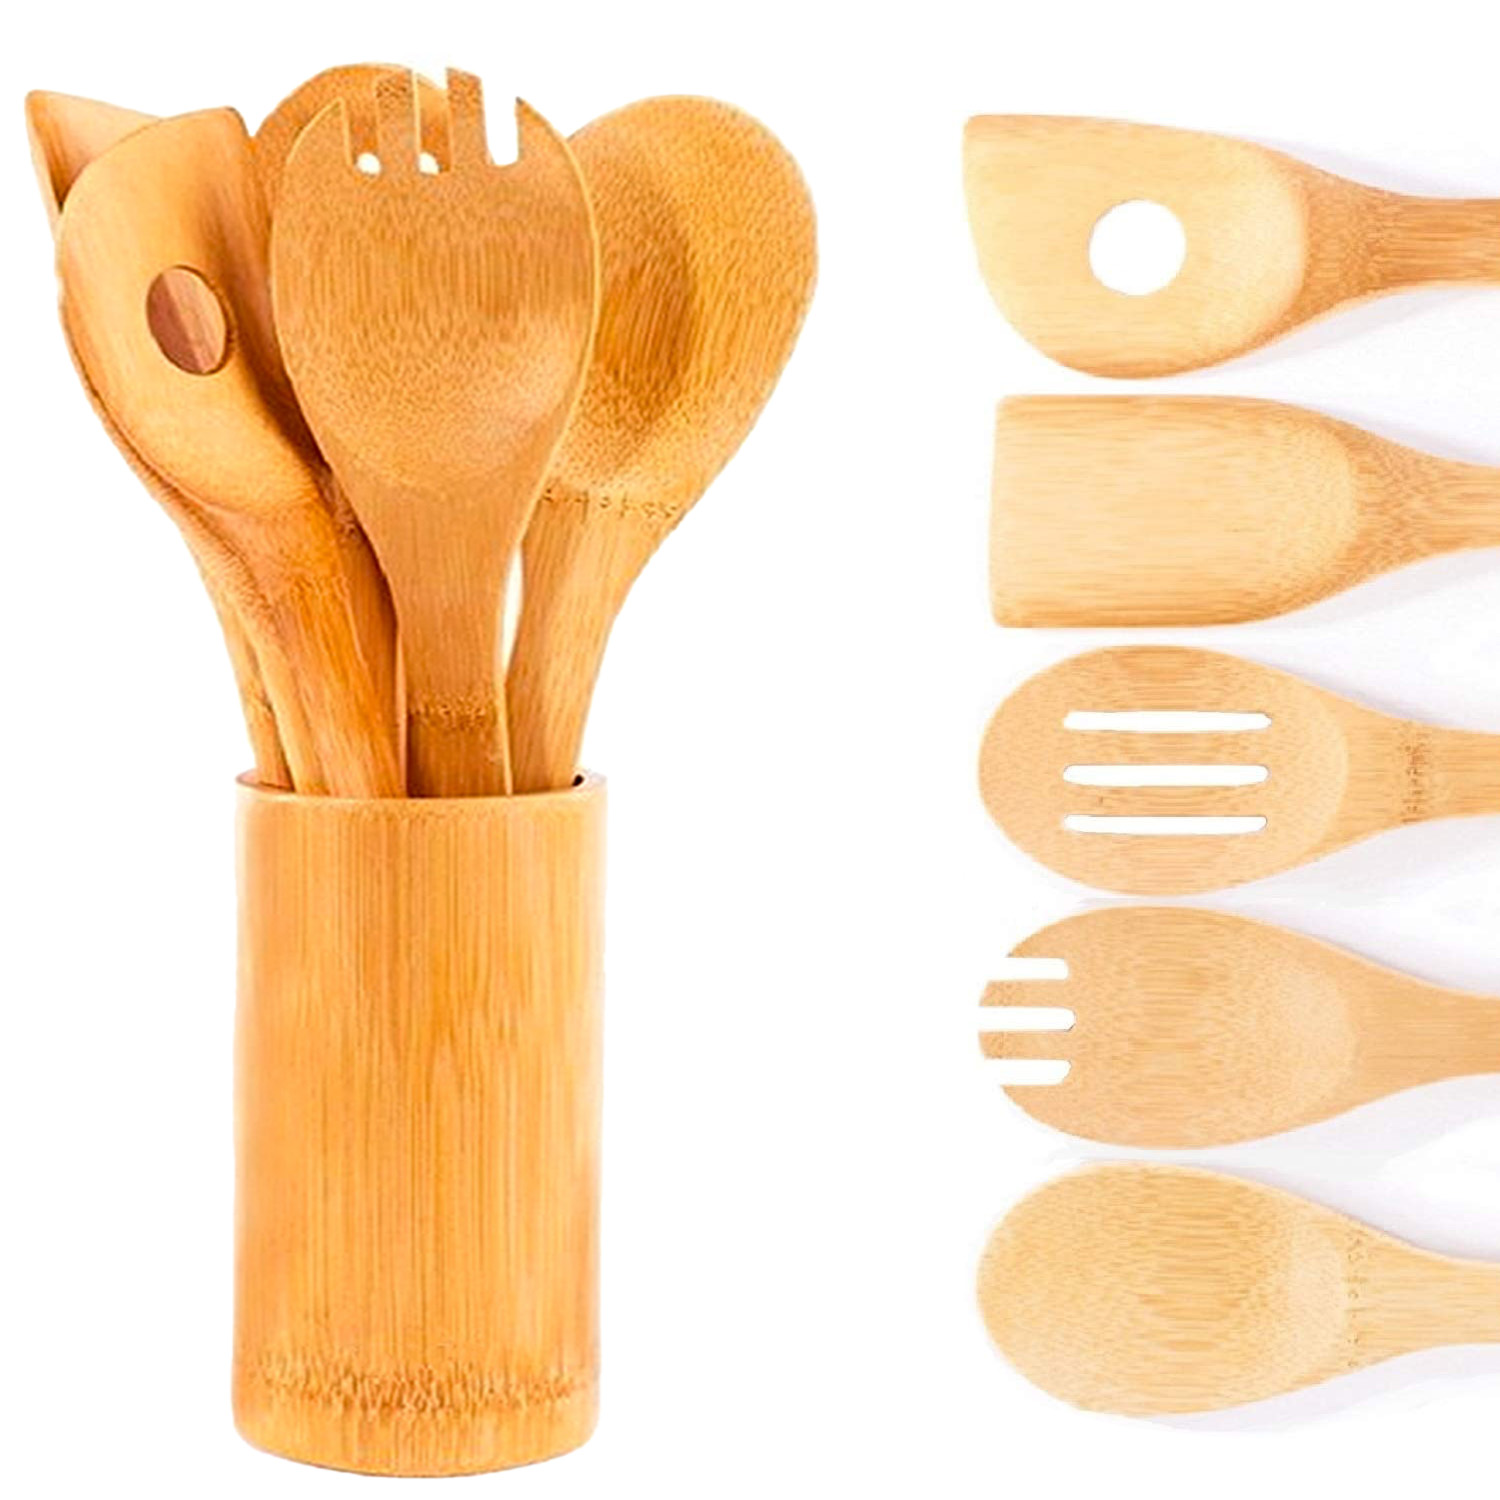 Kitchen Bamboo Spoon Cooking Utensils Set Natural Teak Wooden Spoons Handle Cooking Bamboo Utensils Set